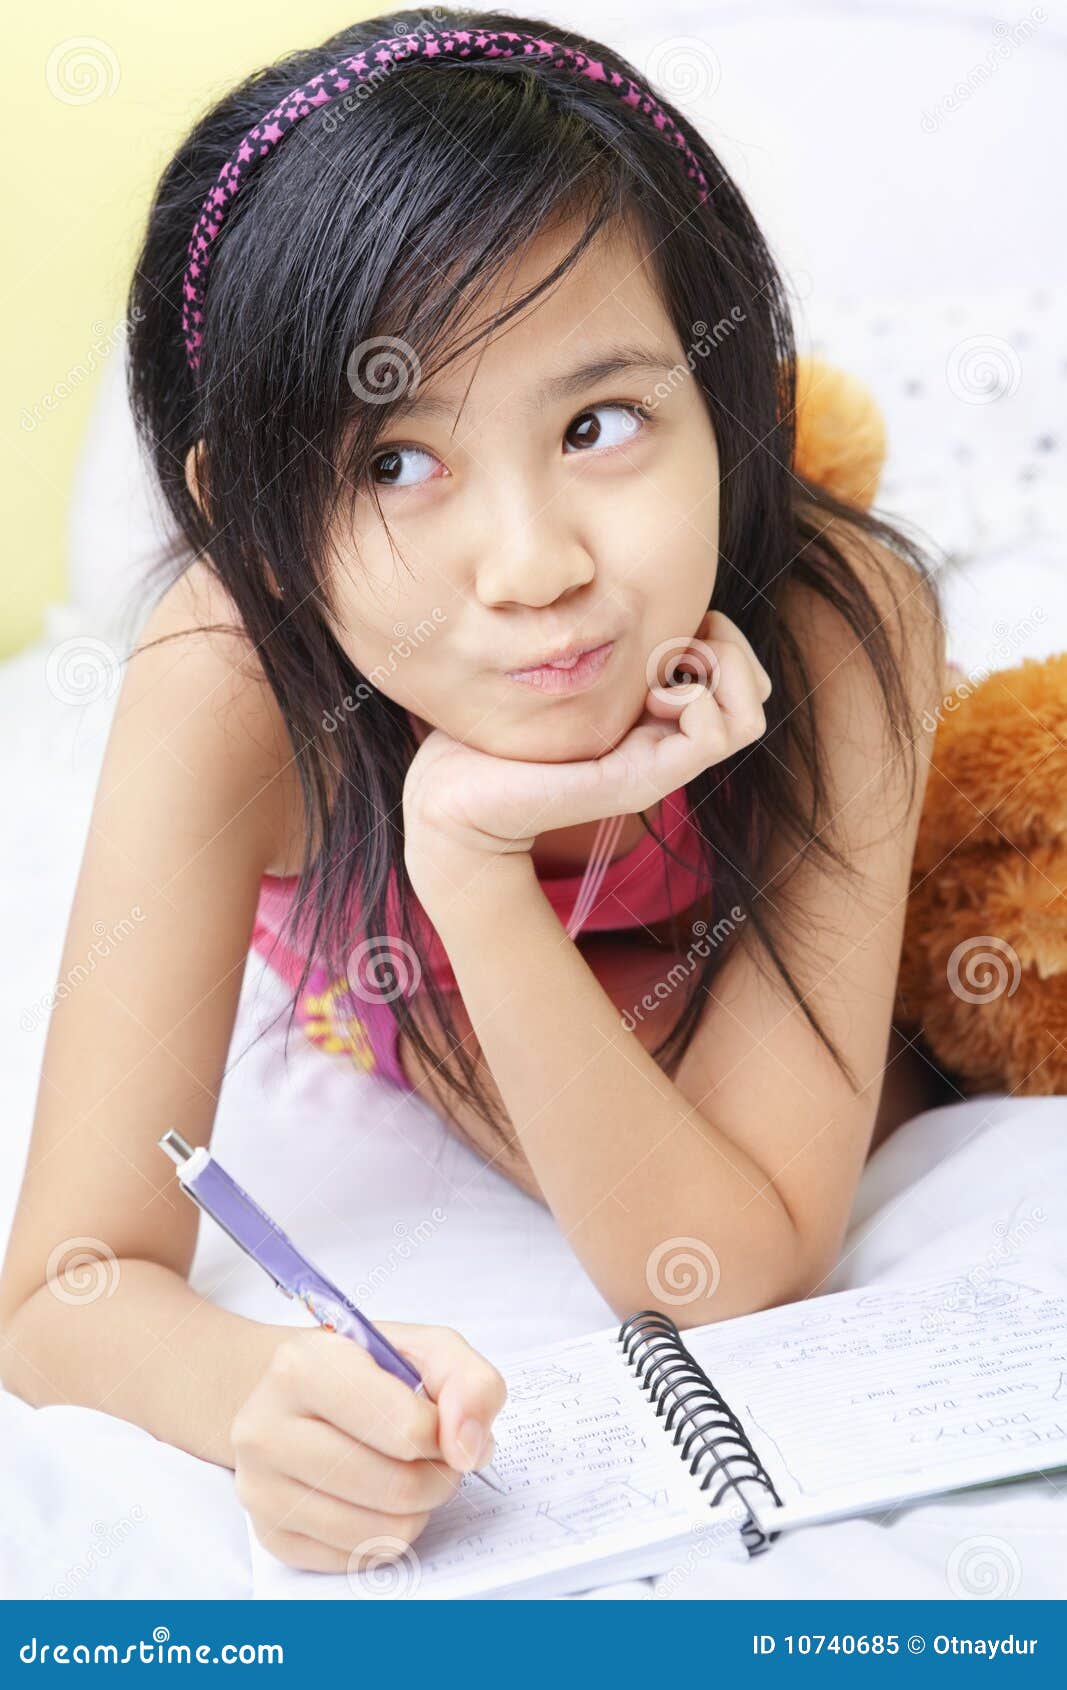 little girl writing her diary